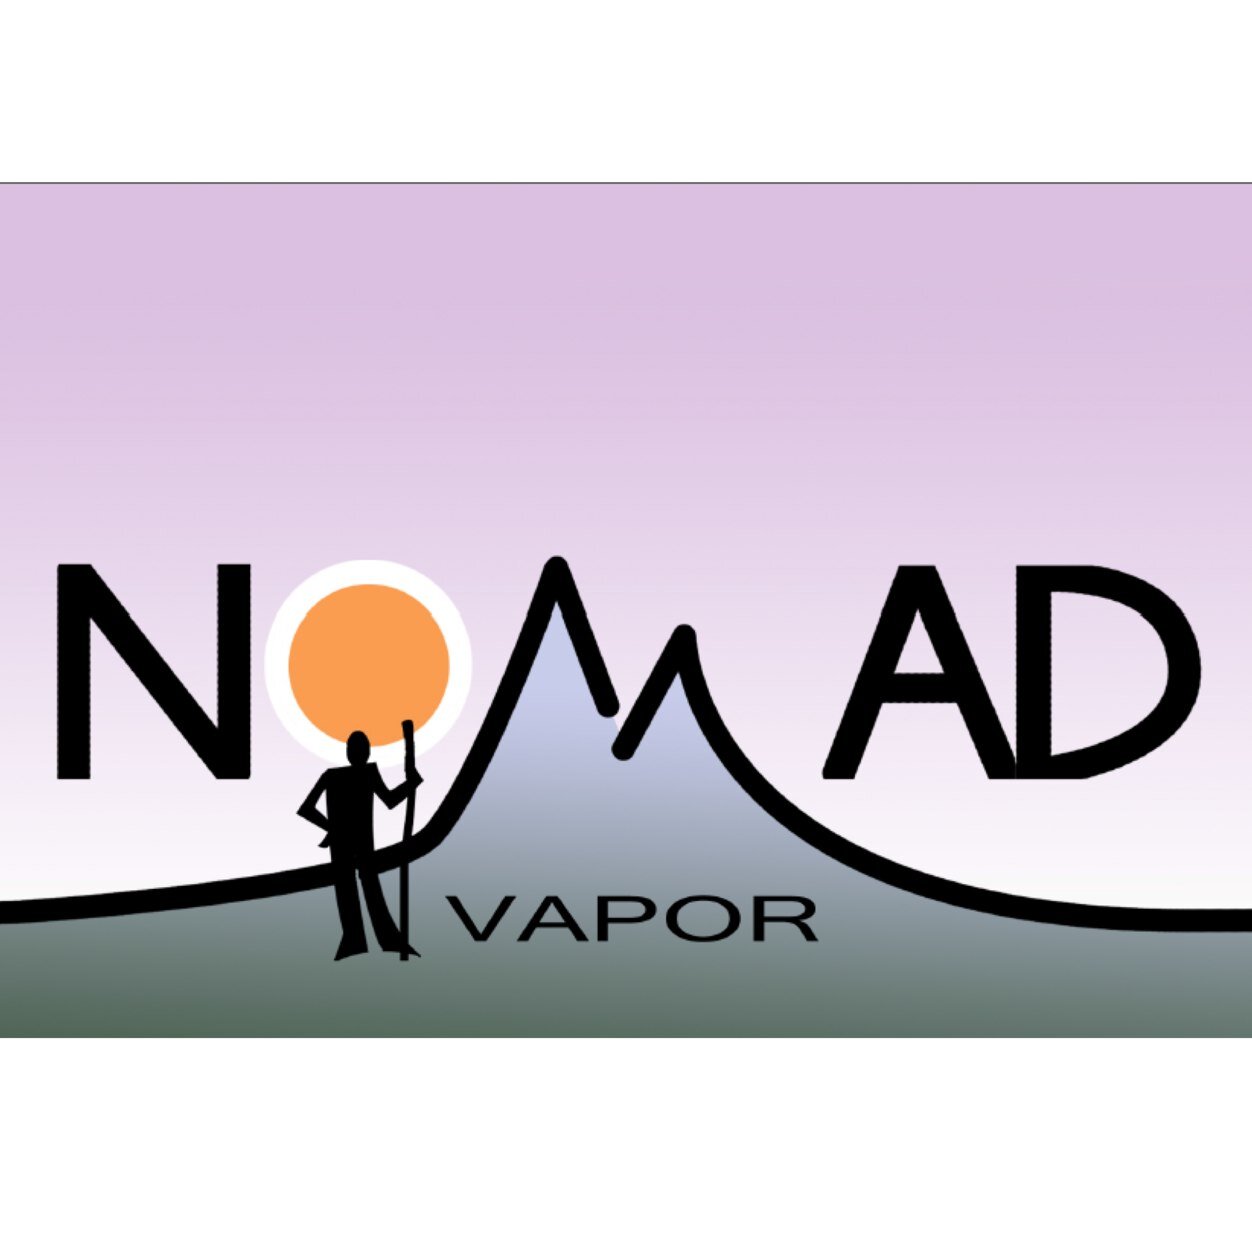 Nomad Vapor
Mon-Thurs: 10A-8P
Fri-Sat: 10A-9P
Sun: 12P-5P
4607 South Point Parkway, 
Fredericksburg, VA 22407
(540)693.1209